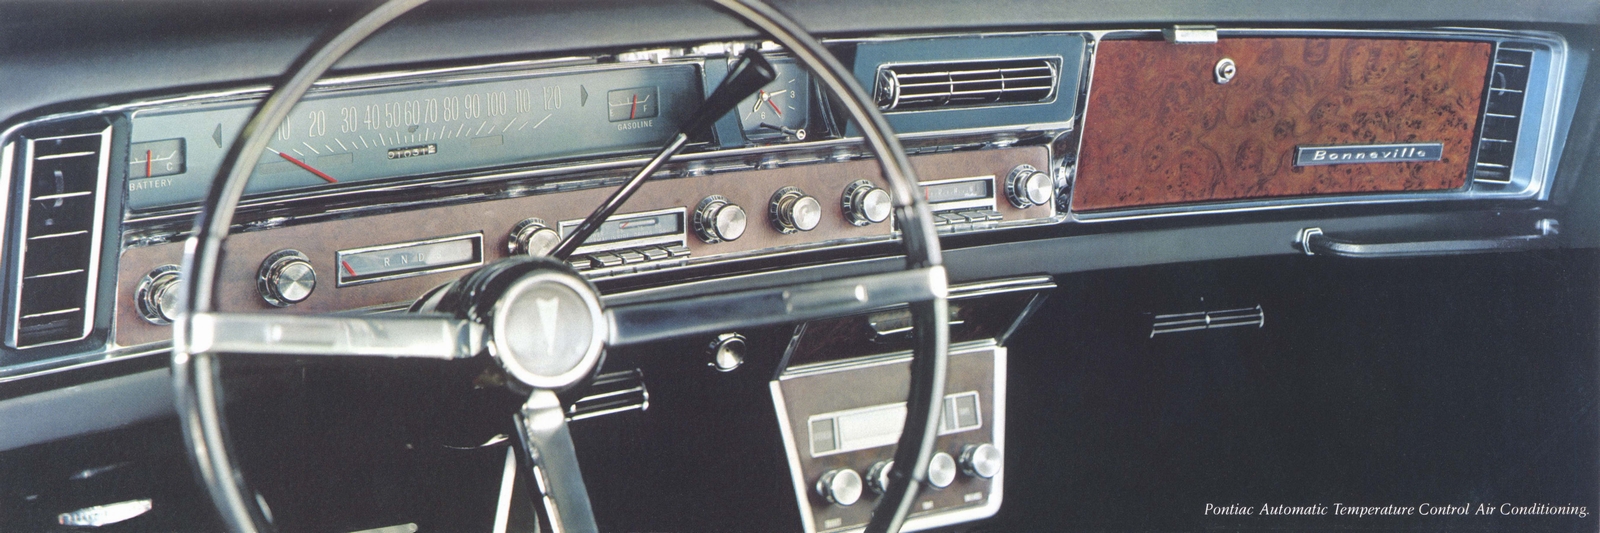 n_1967 Pontiac Air Conditioning-04-05.jpg